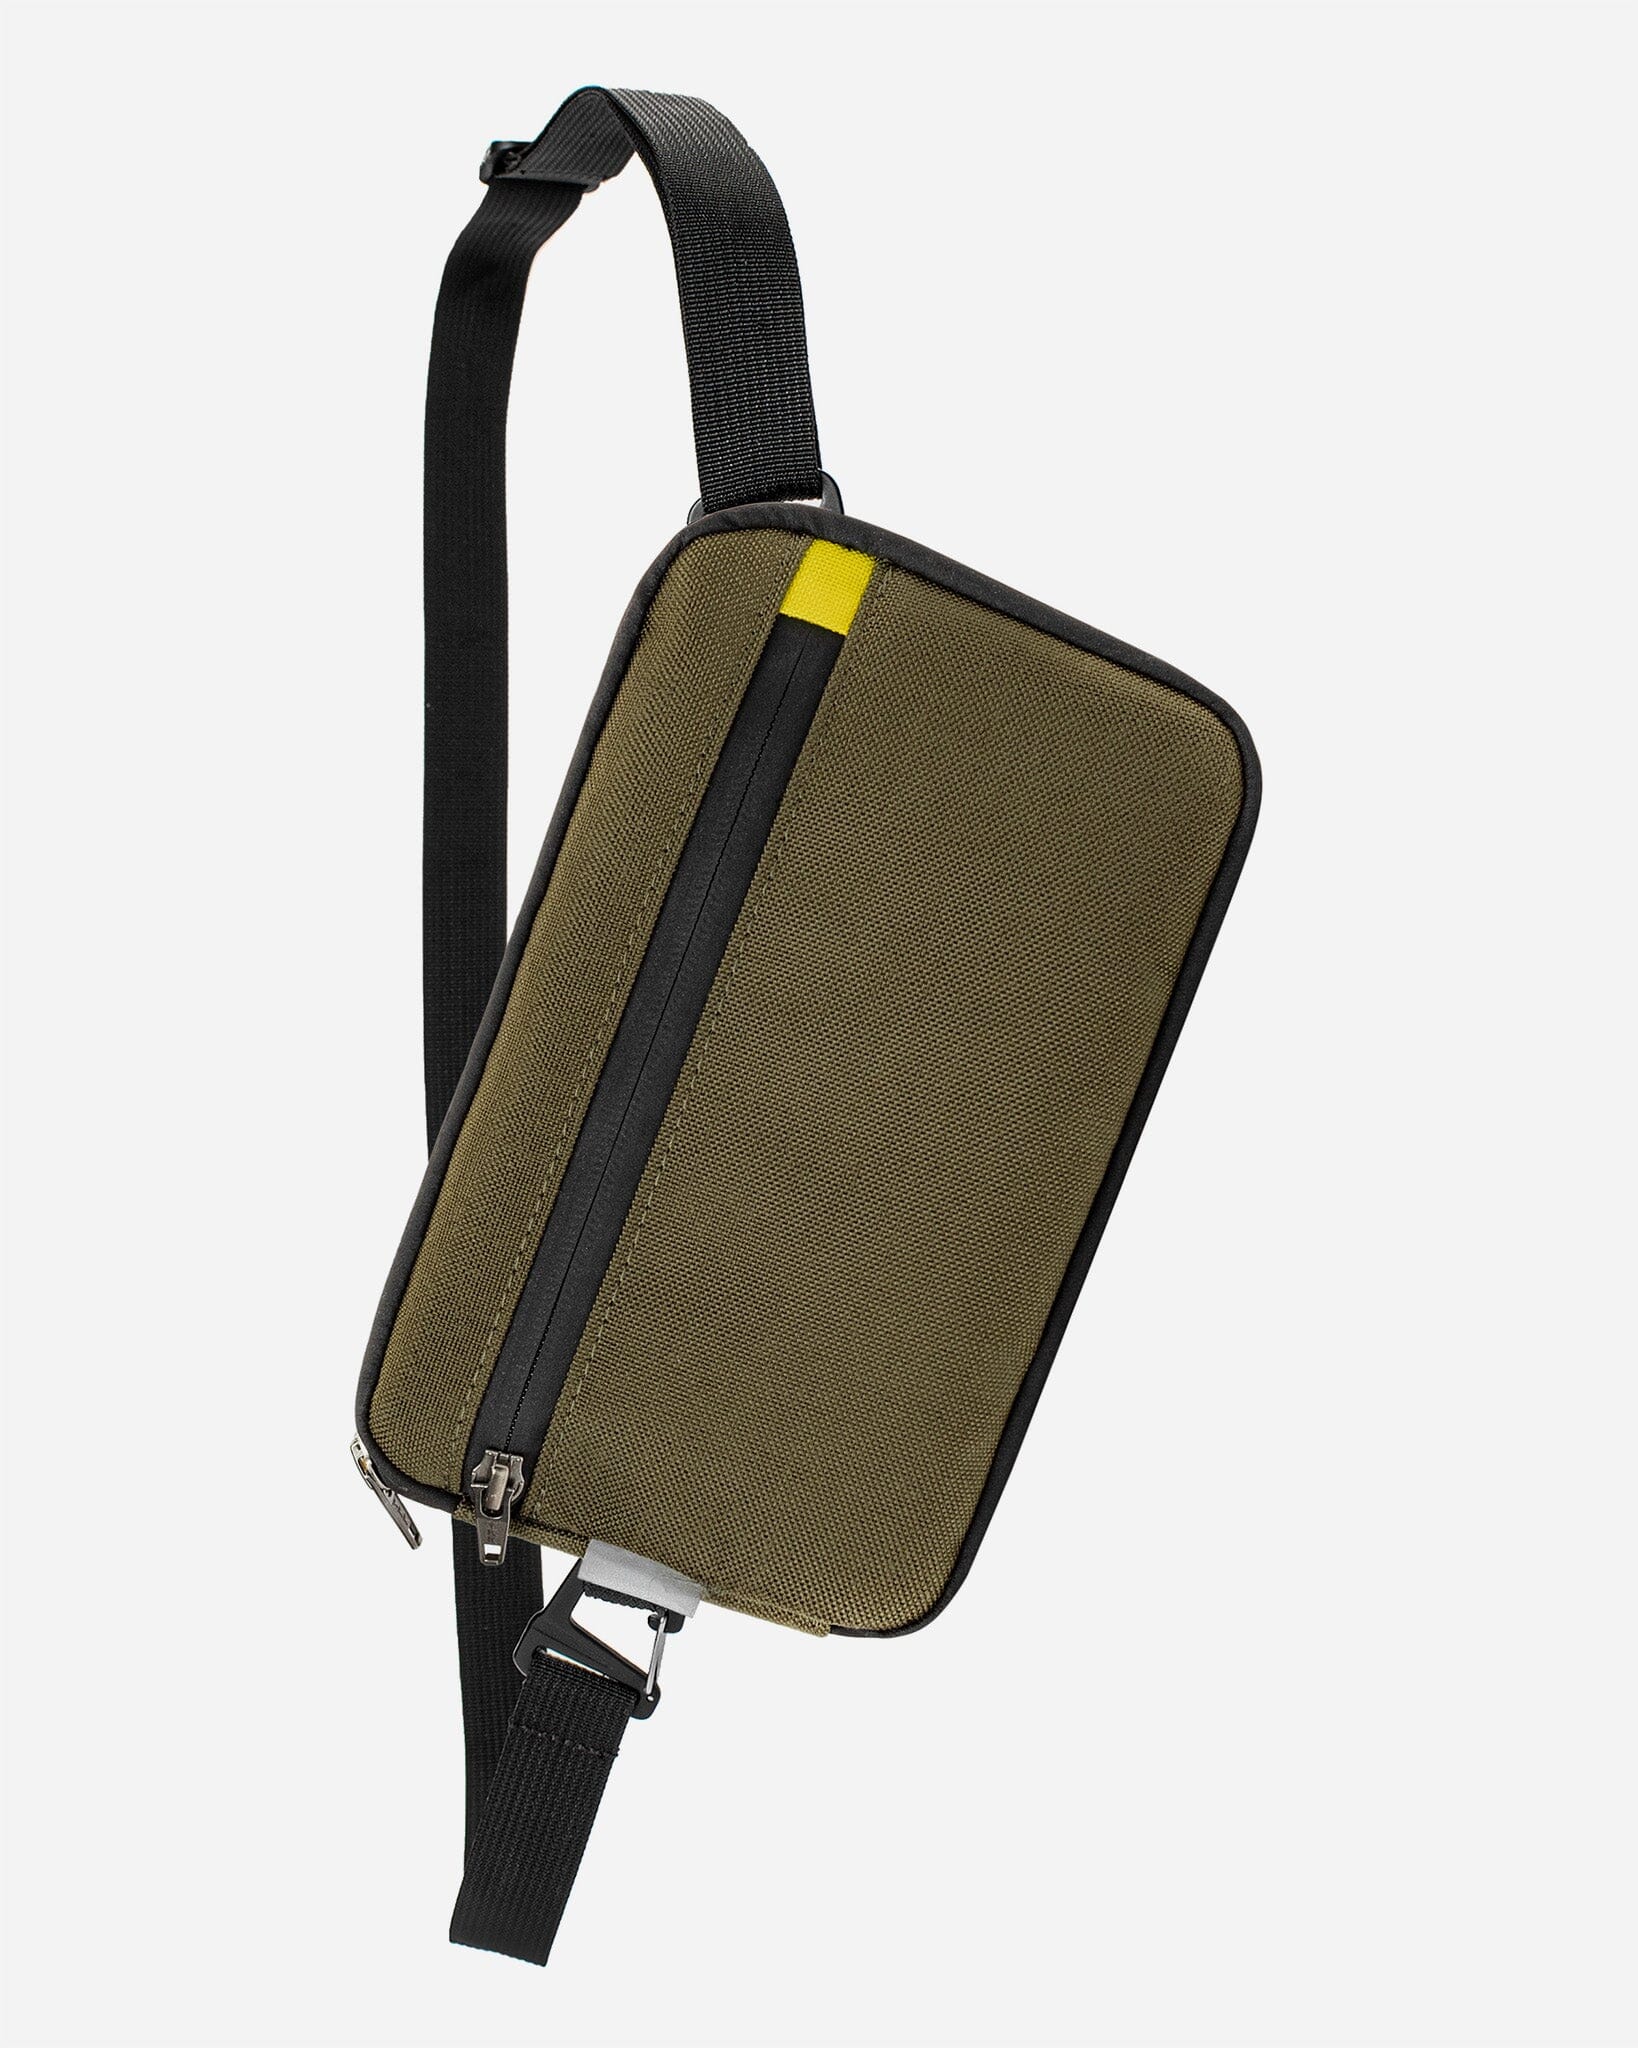 AUX™ Sling - Defiant Olive Cordura Bag bolstr Ranger Green/Yellow  